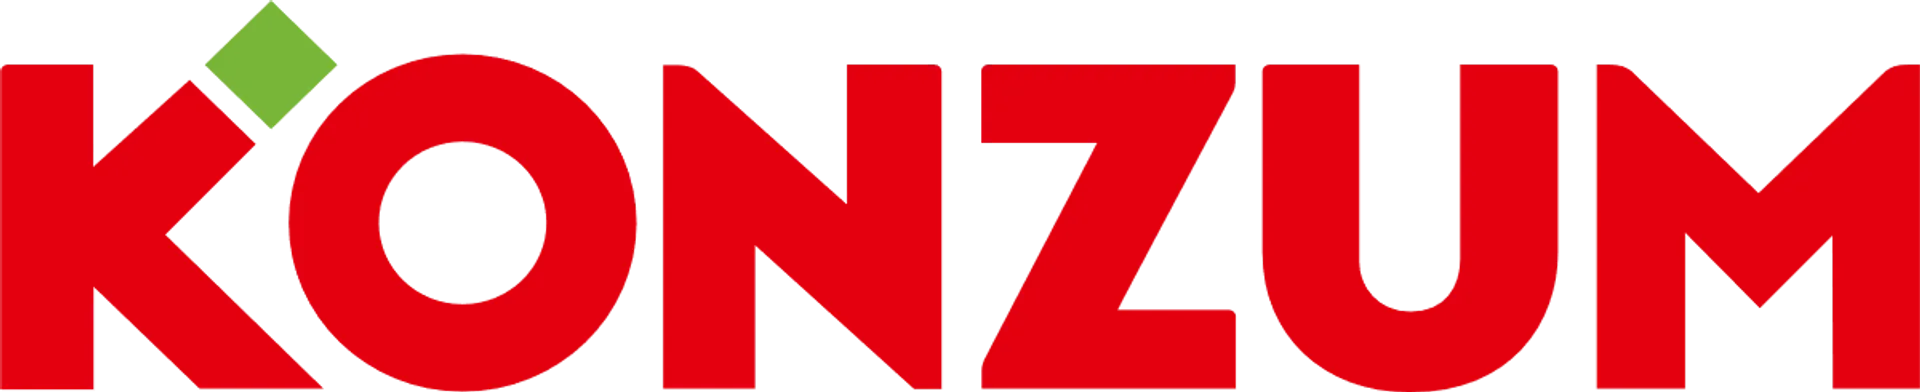 KONZUM logo